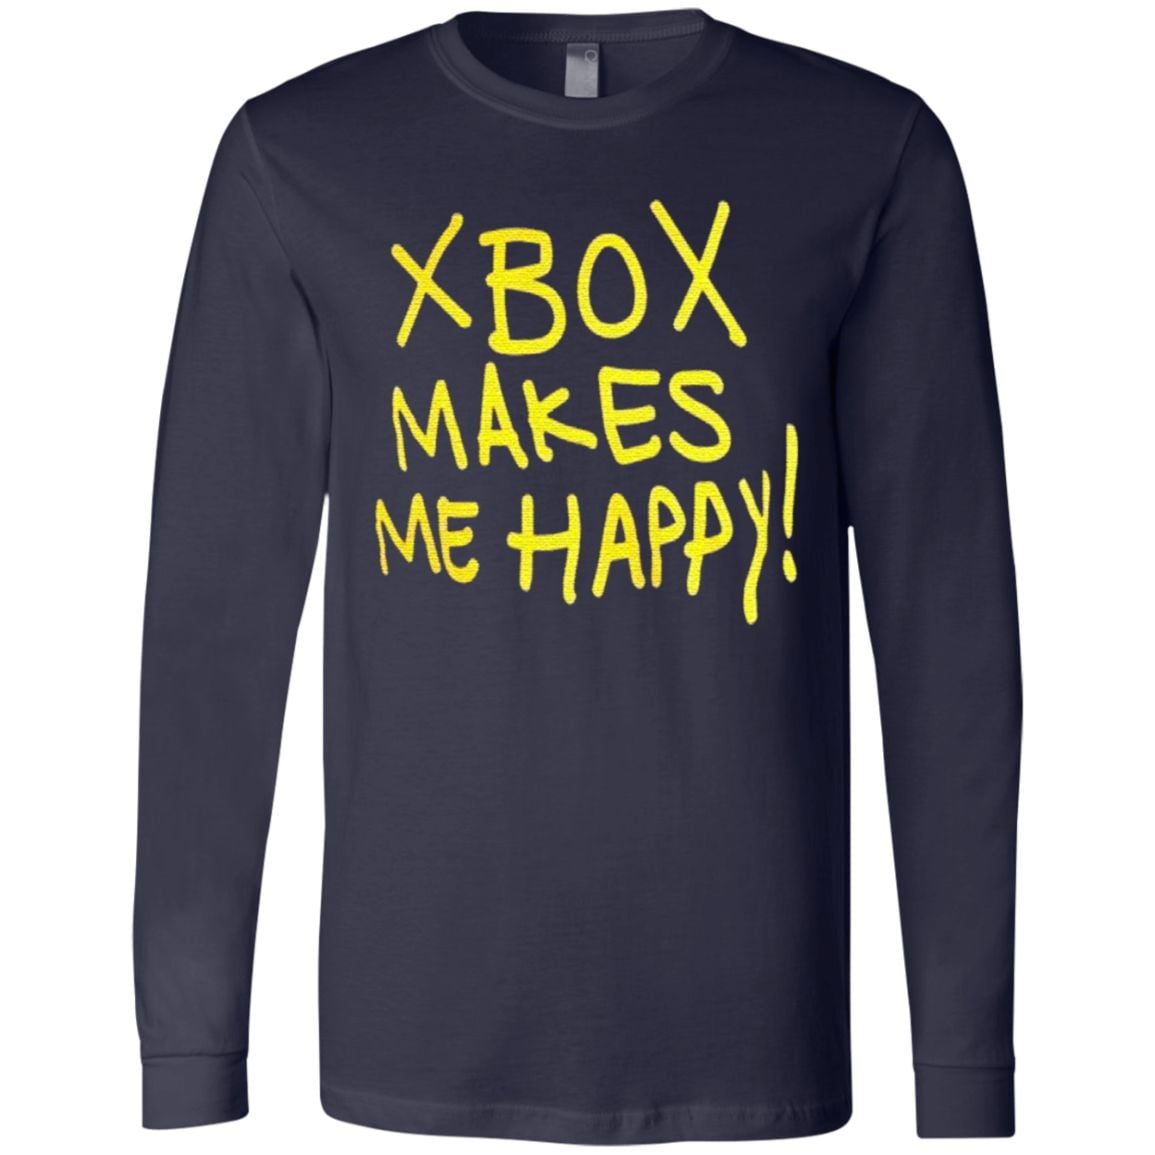 Xbox makes me happy t shirt